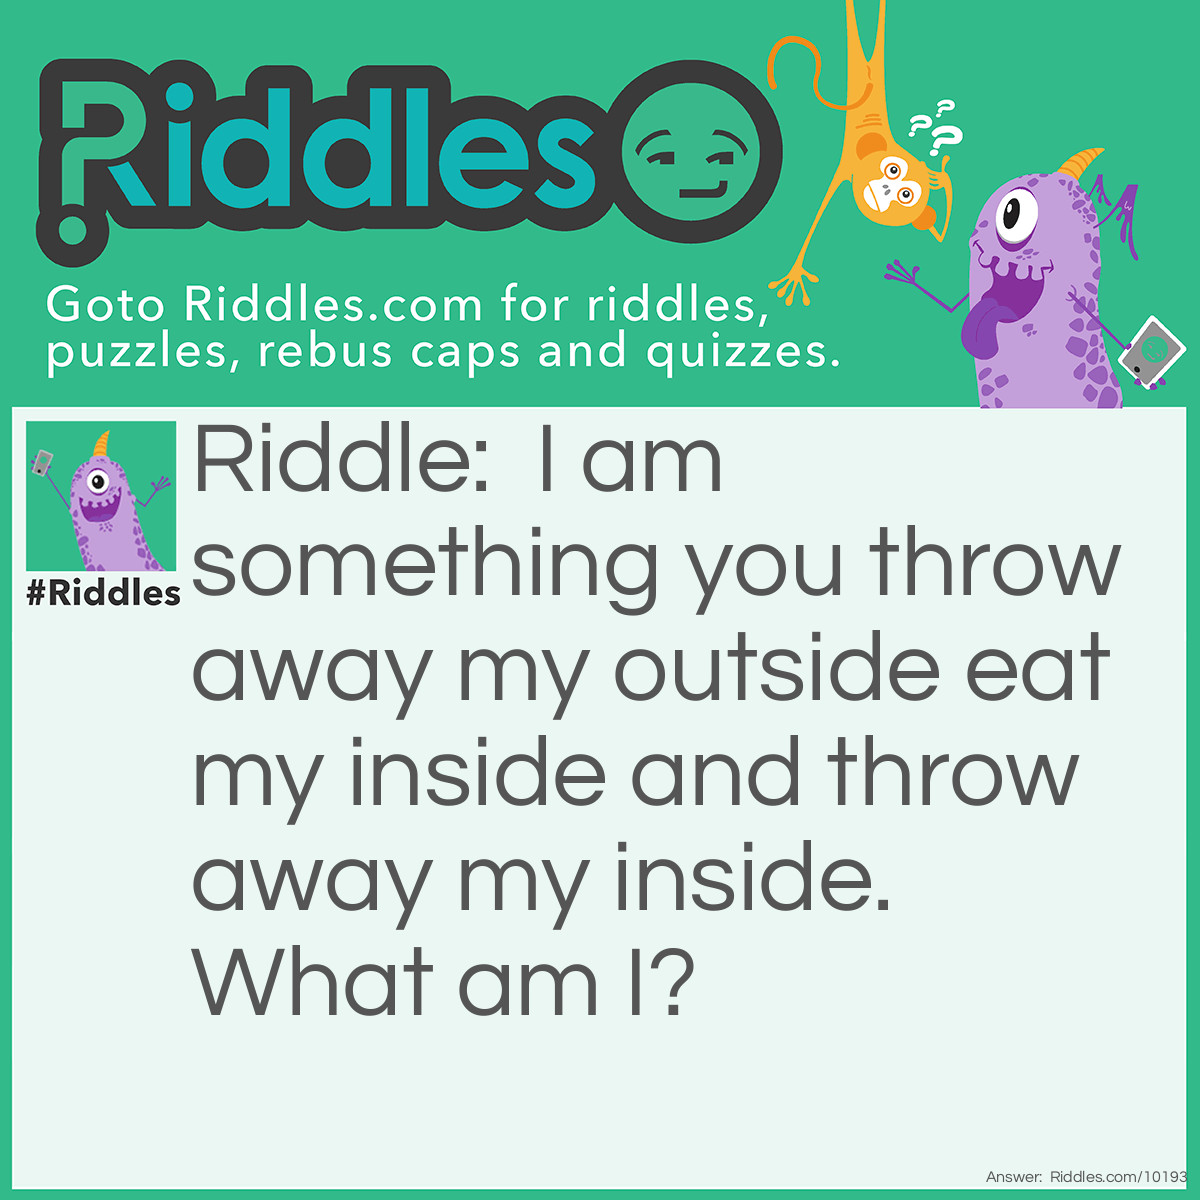 Riddle: I am something you throw away my outside eat my inside and throw away my inside. What am I? Answer: MANGO/POPSICLE